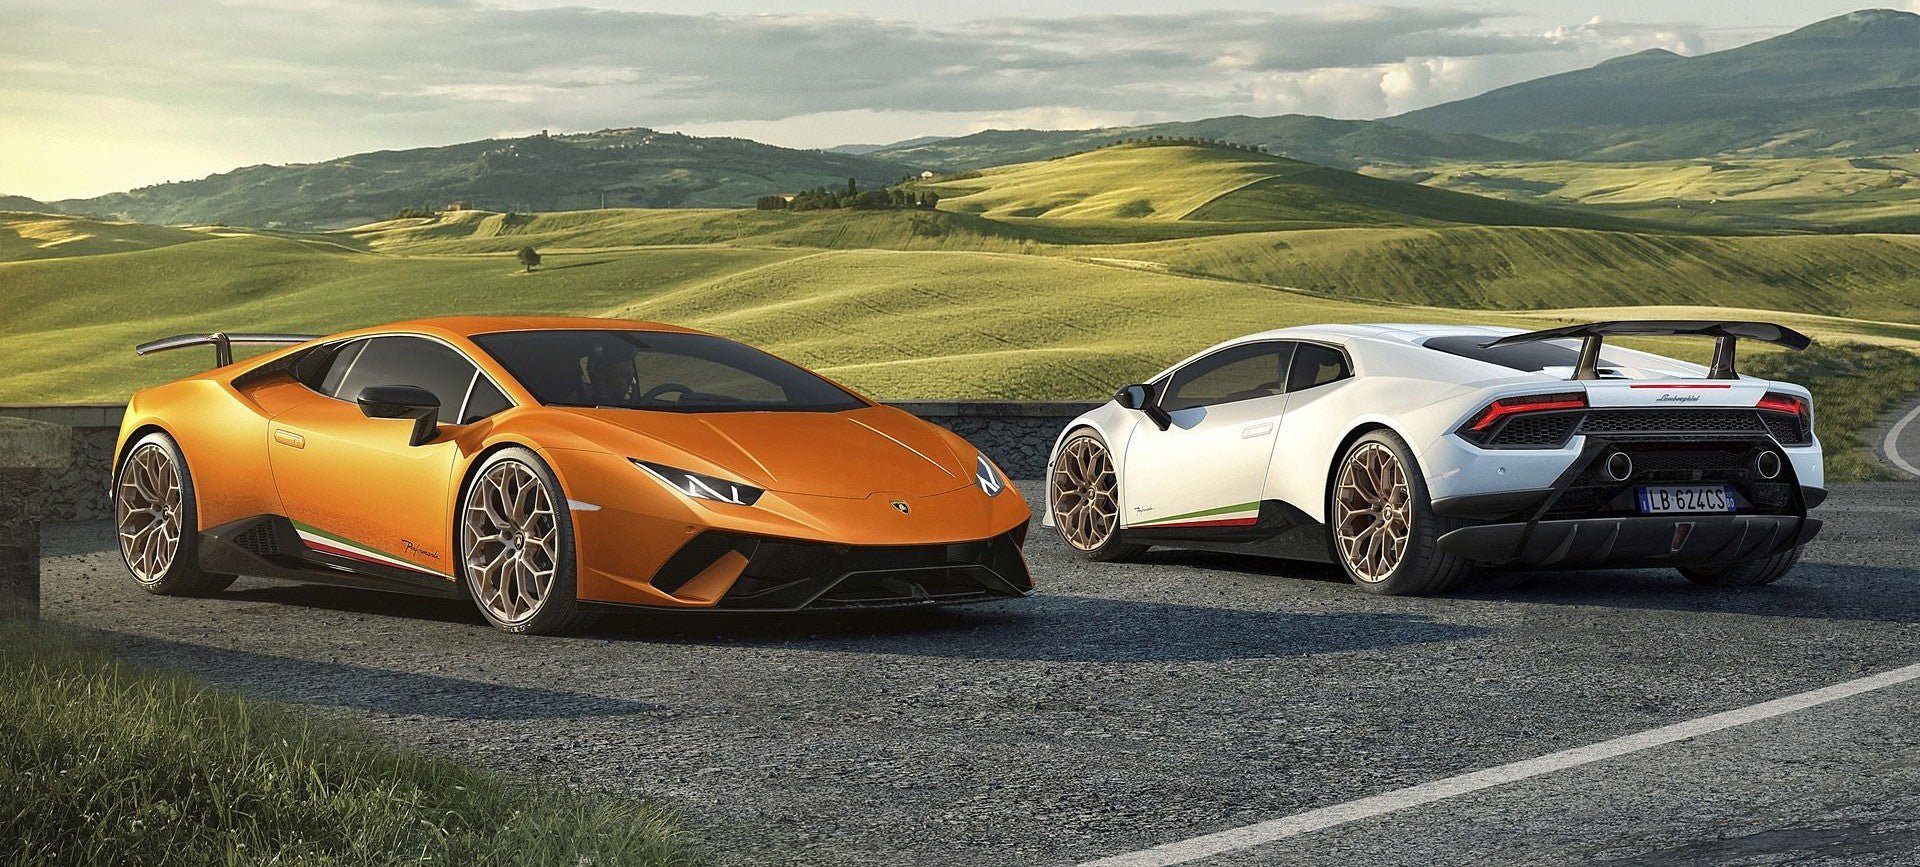 Surface Transforms For Lamborghini Models - Hinz Motorsport